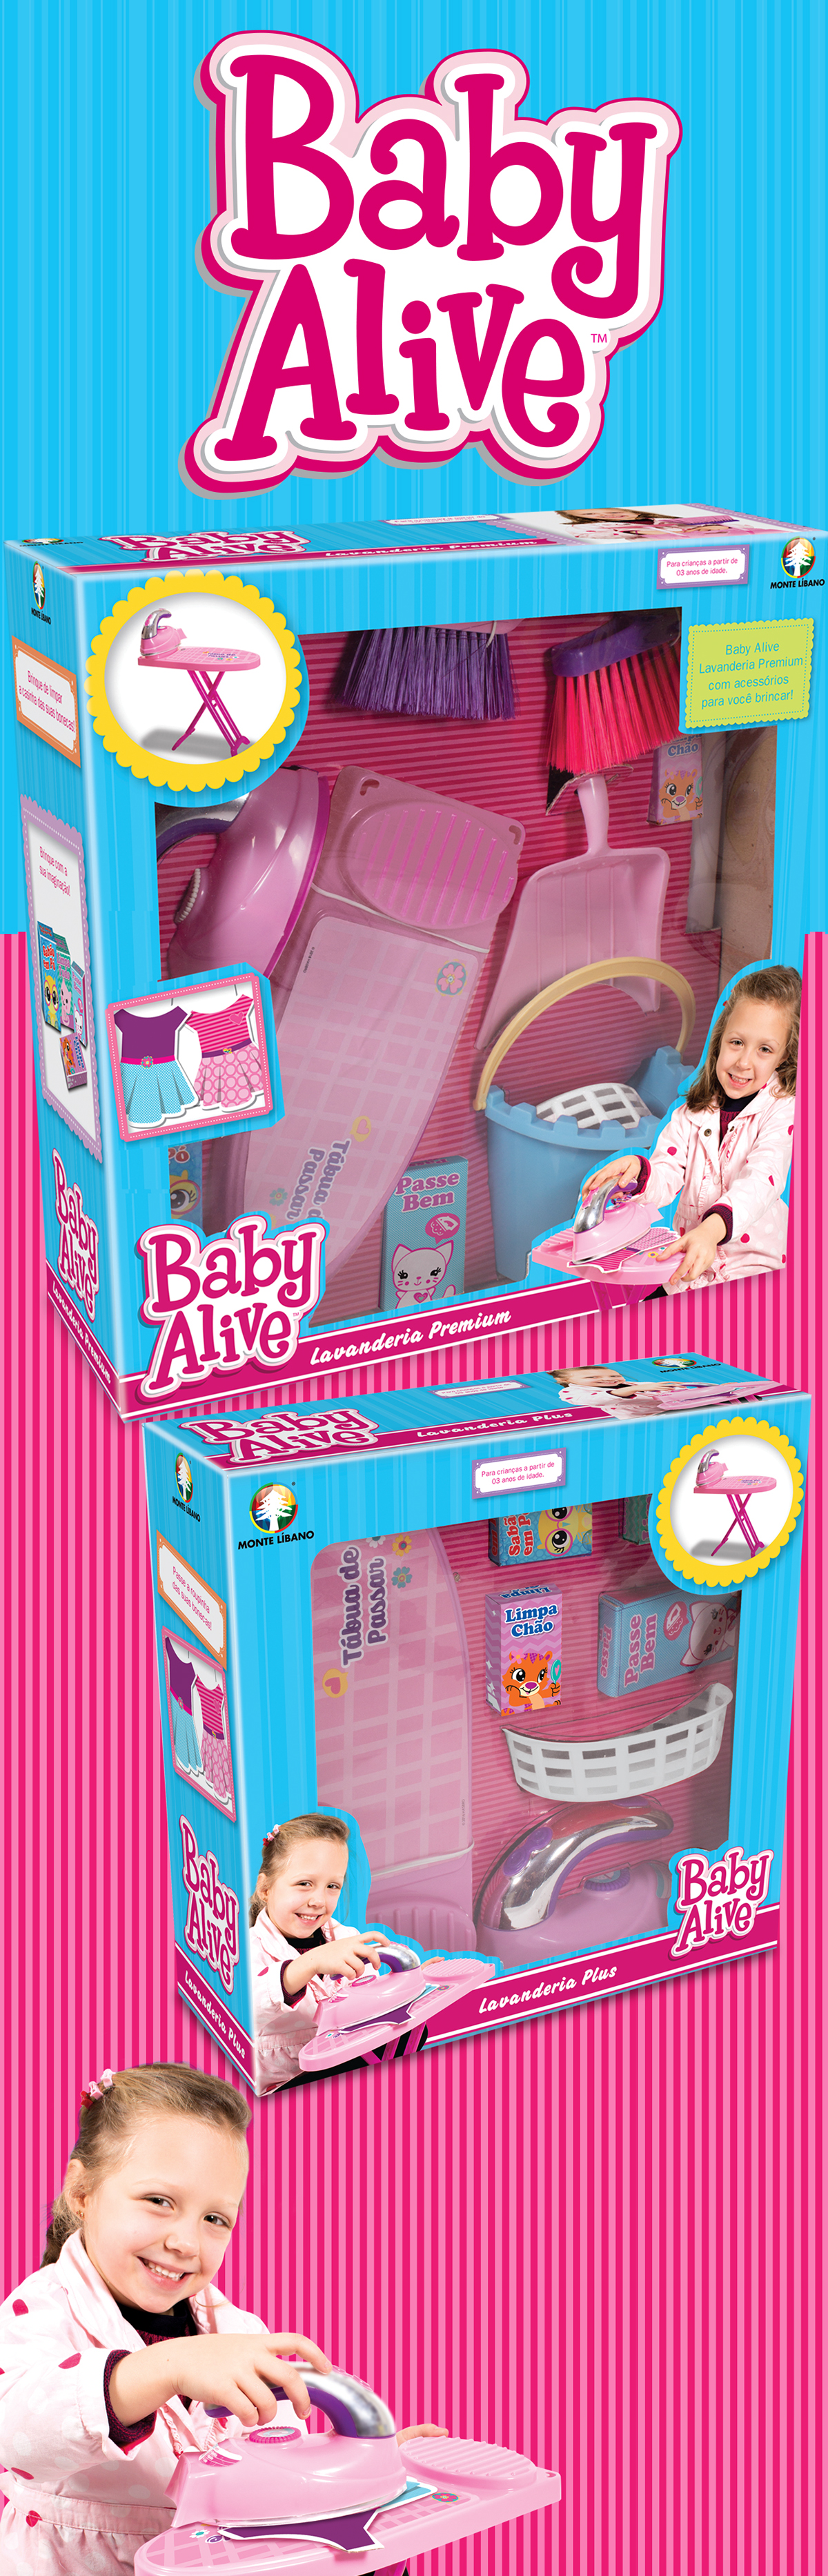 Adobe Portfolio Baby Alive Hasbro doll Packaging